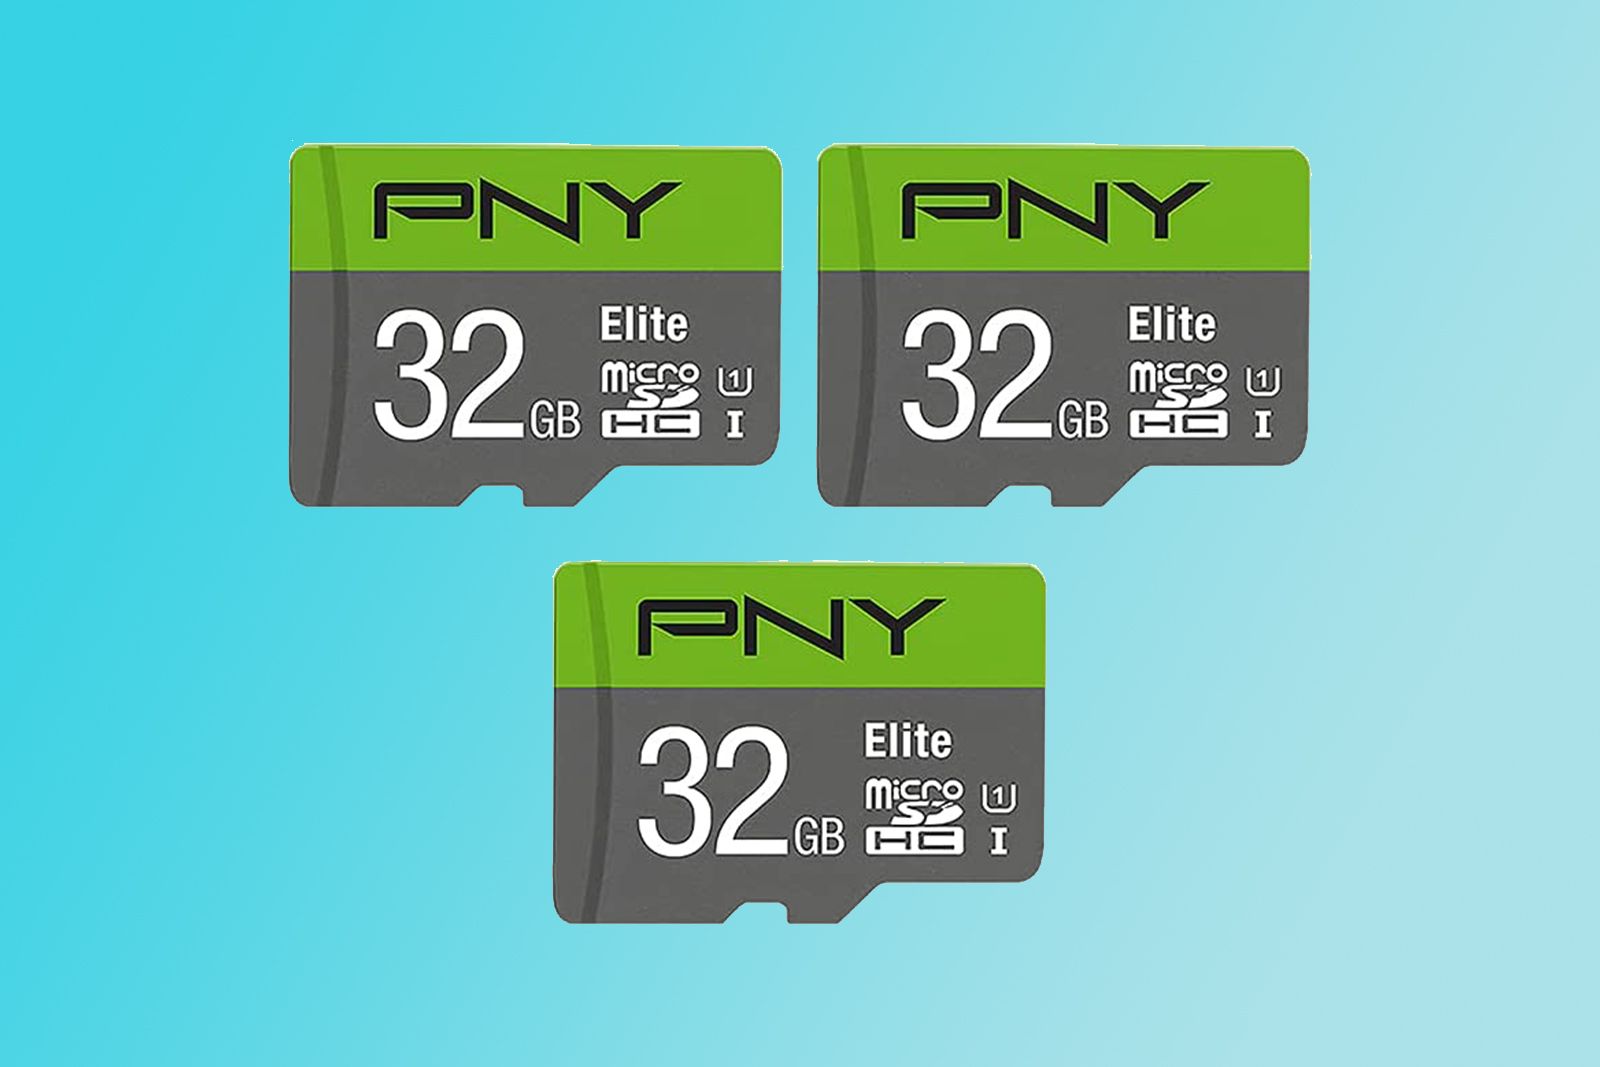 PNY elite 32GB microSD 3 pack